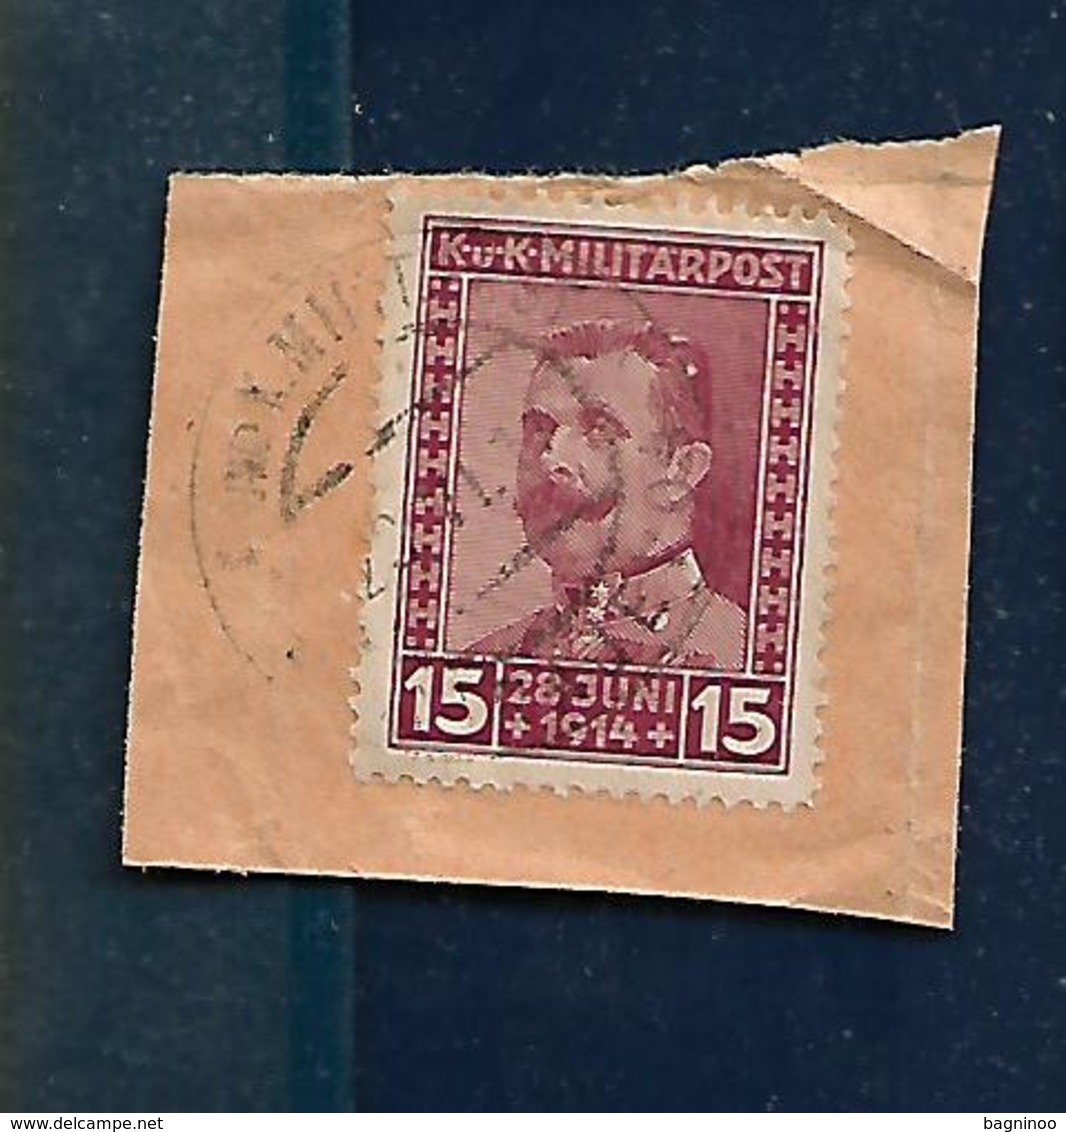 AUSTRIA Occupation Of Bosnia And Herzegovina KUK Militar Post With Stamp Sarajevo 23.VII 1918 - Gebruikt